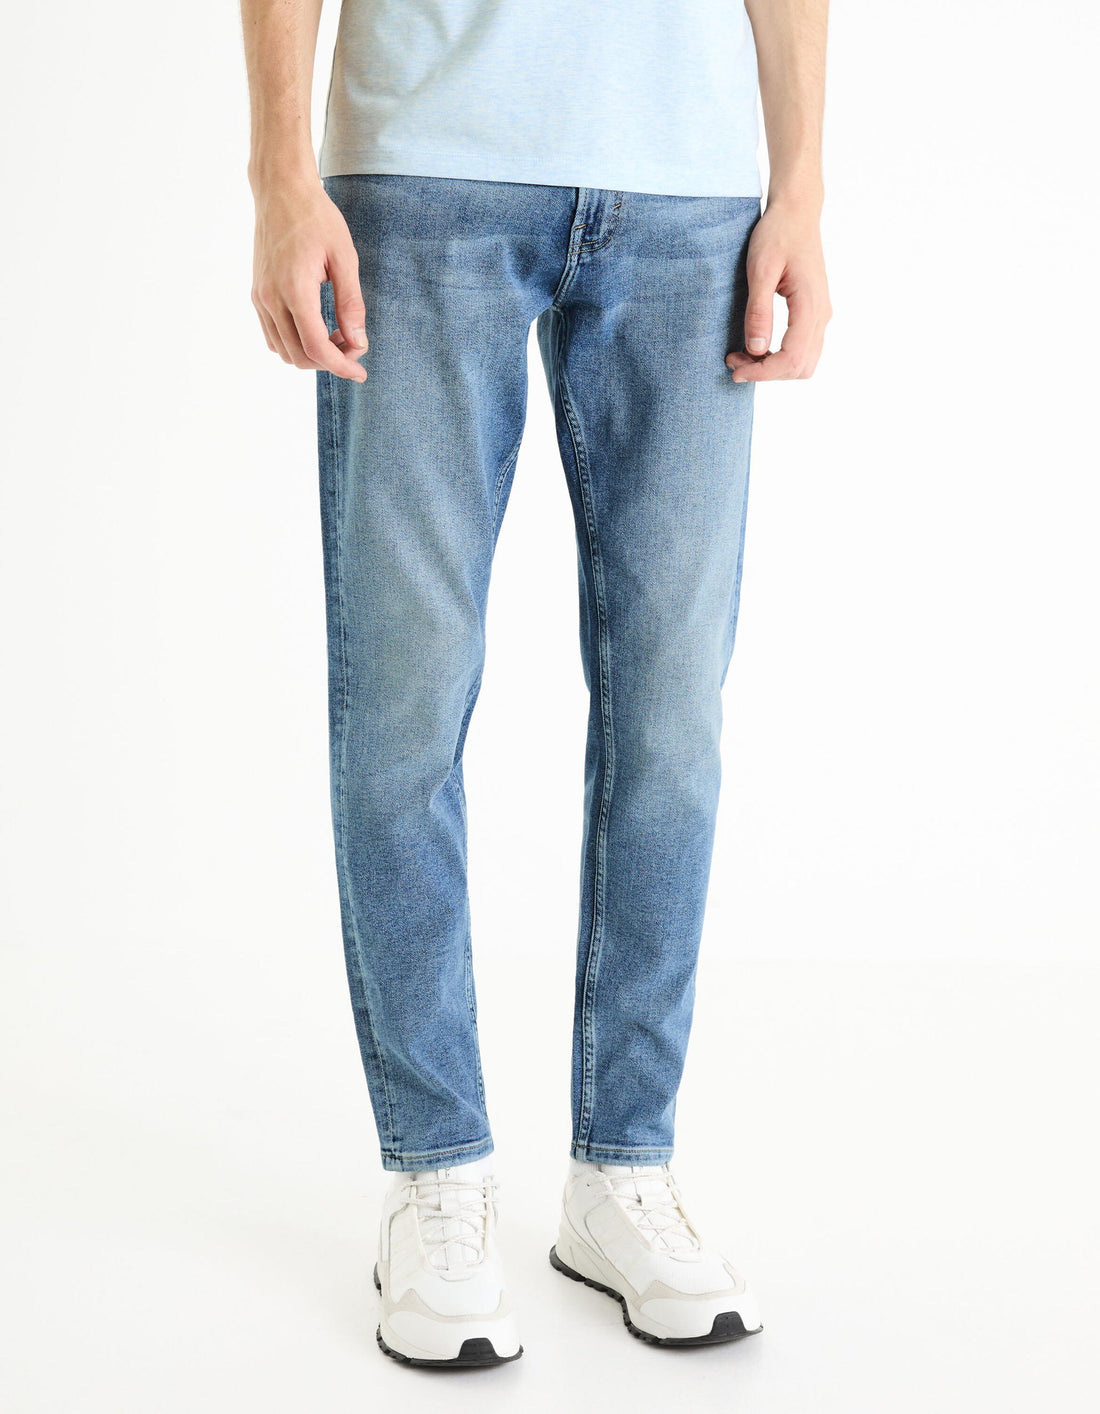 C25 Slim Stretch Jeans 3 Lengths - Blue_DOFINE25_DOUBLE STONE_01